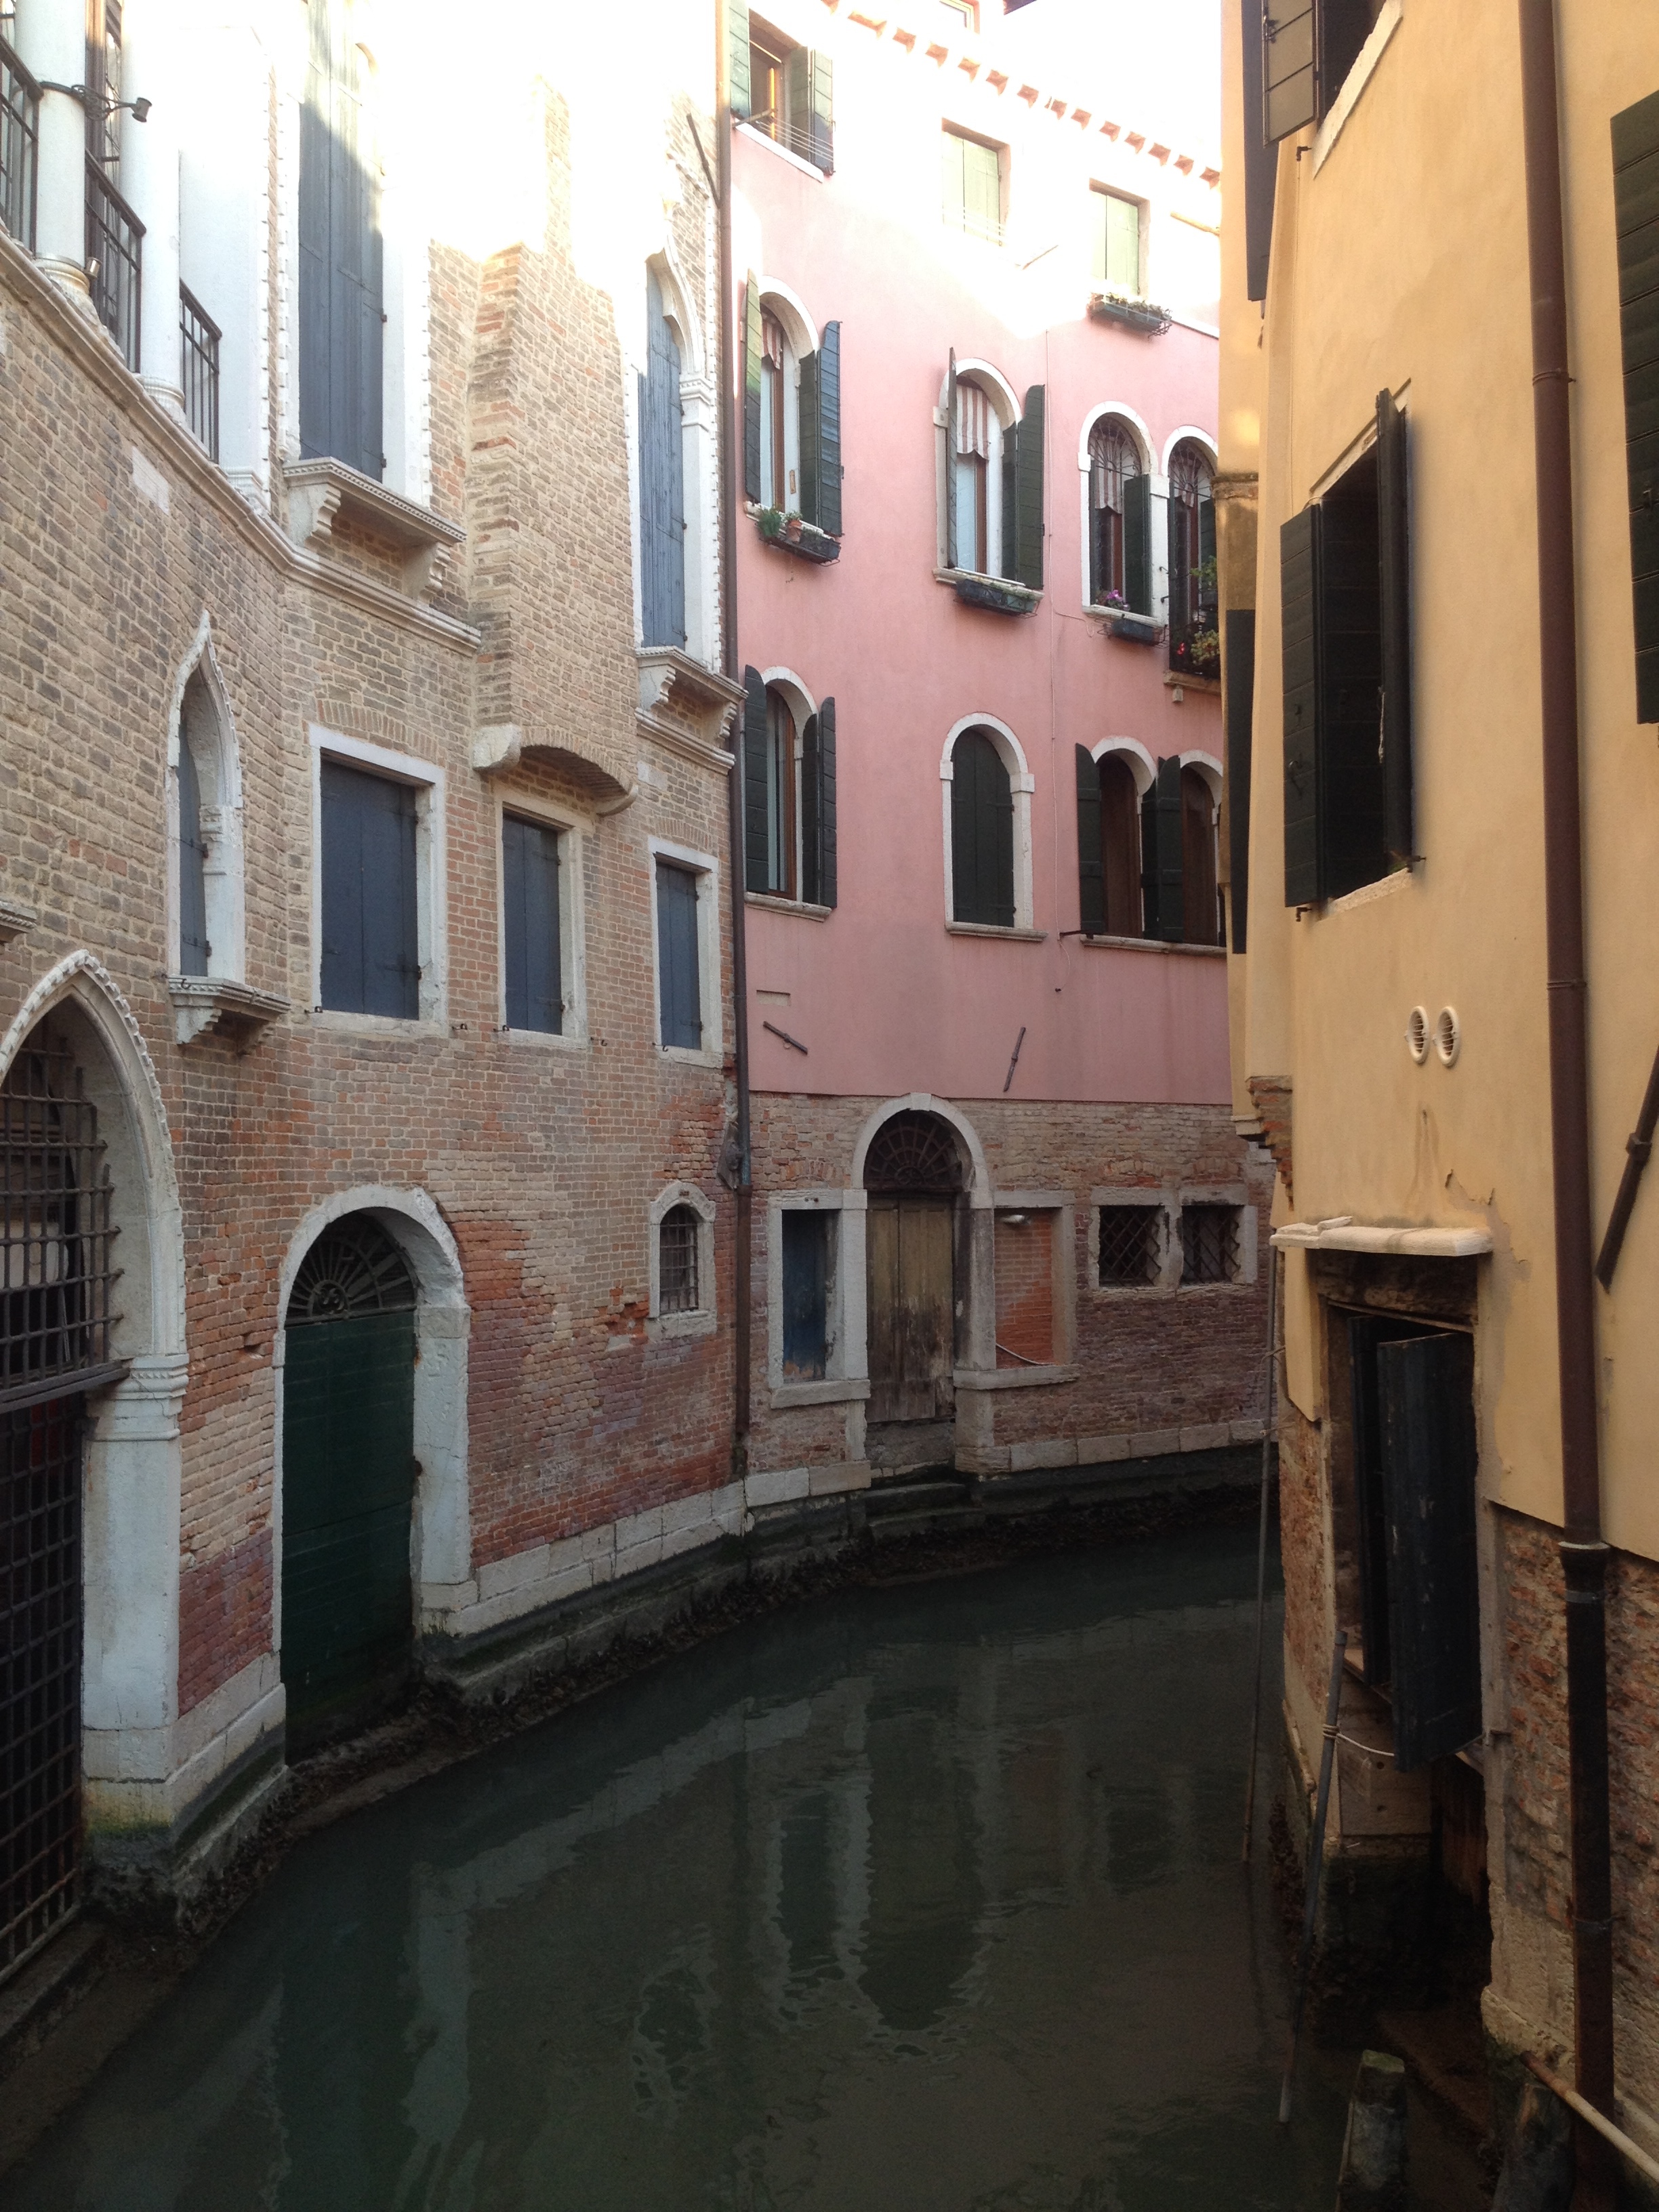 Venice: the Lowdown